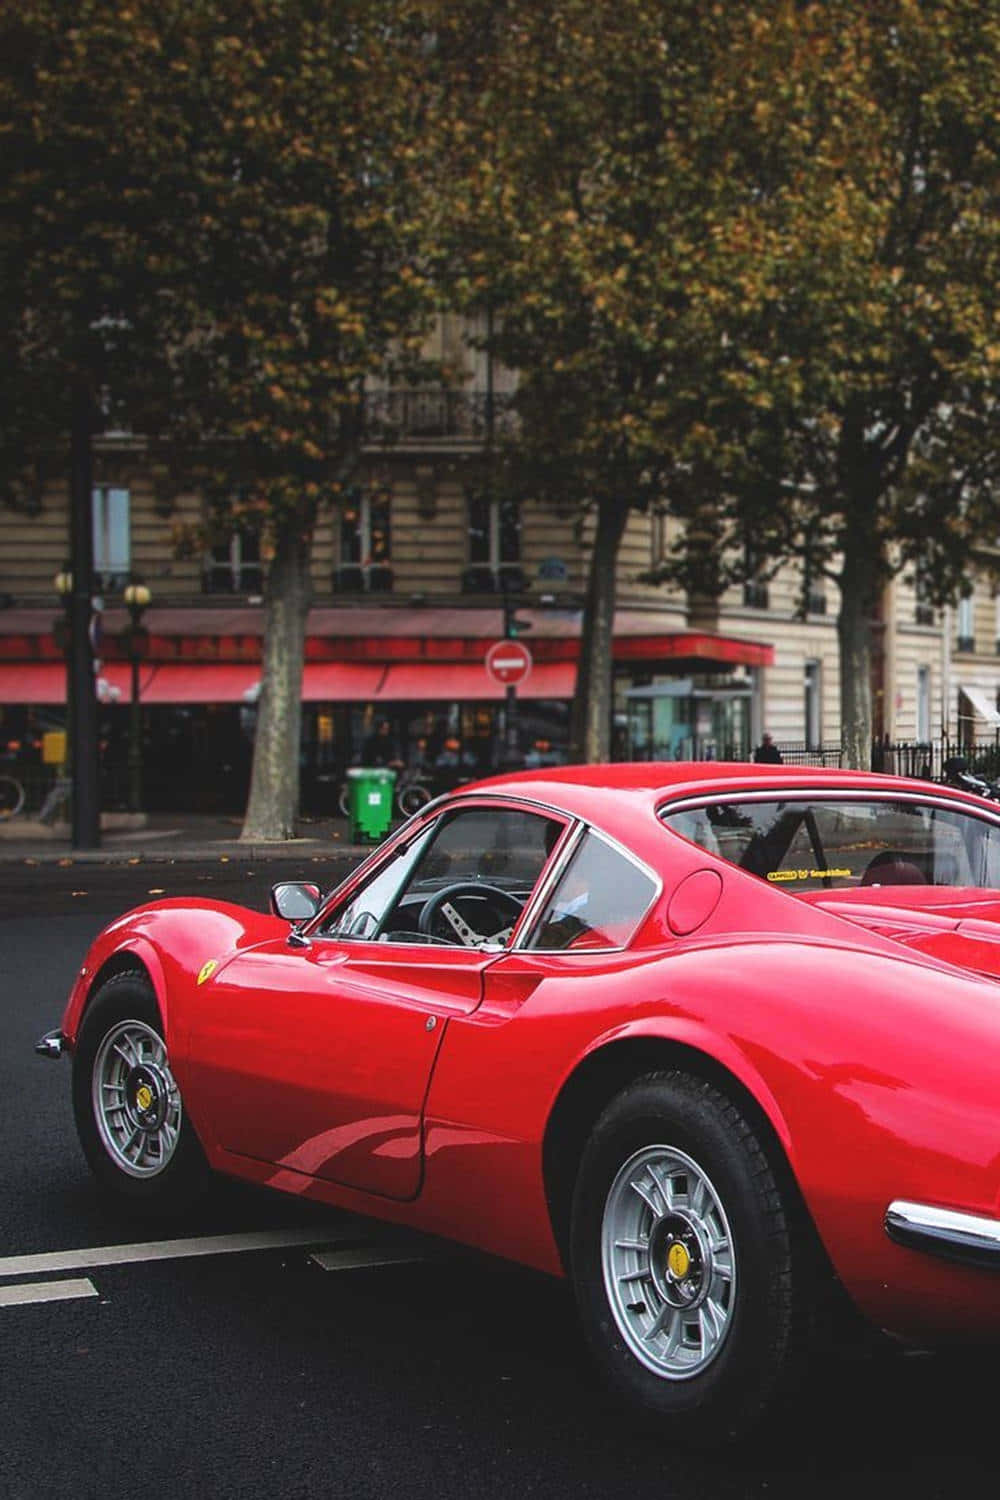 "A beautiful vintage Ferrari cruising along a sunny day." Wallpaper